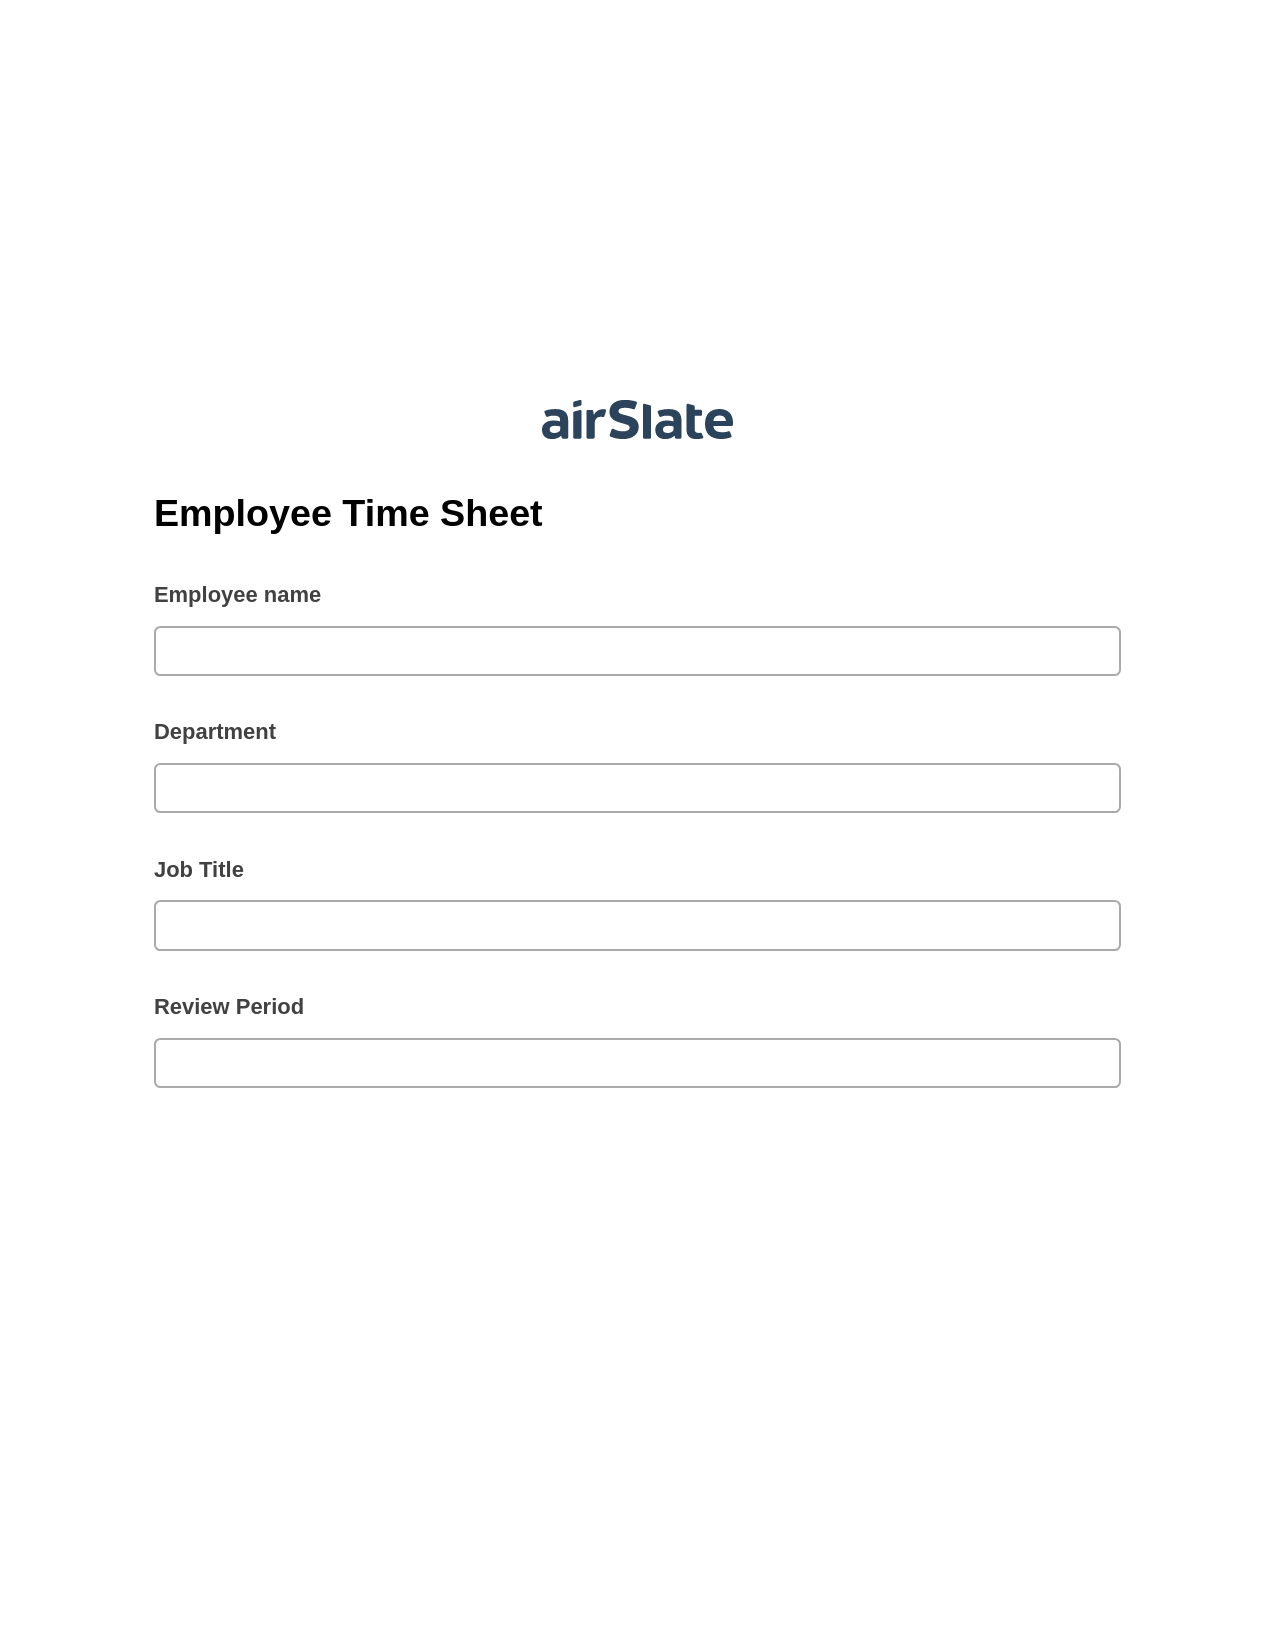 Employee Time Sheet Pre-fill from Salesforce Records Bot, Create Salesforce Records Bot, Archive to OneDrive Bot